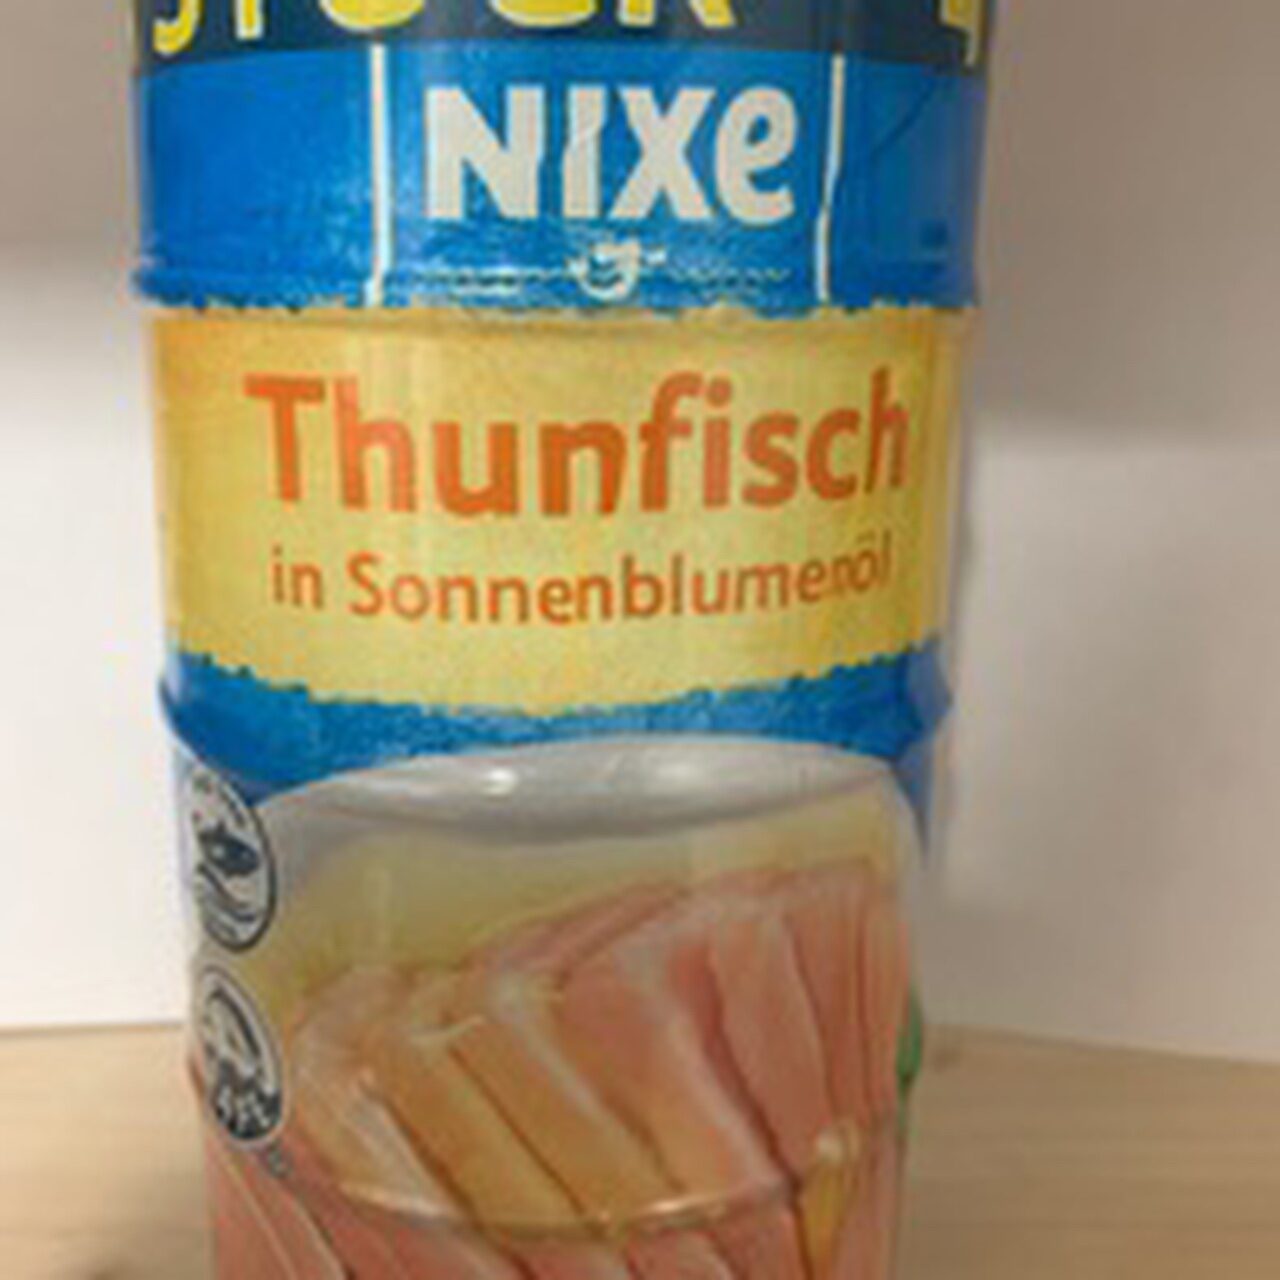 Thunfisch in Sonnenblumen Öl - Prodotto - de